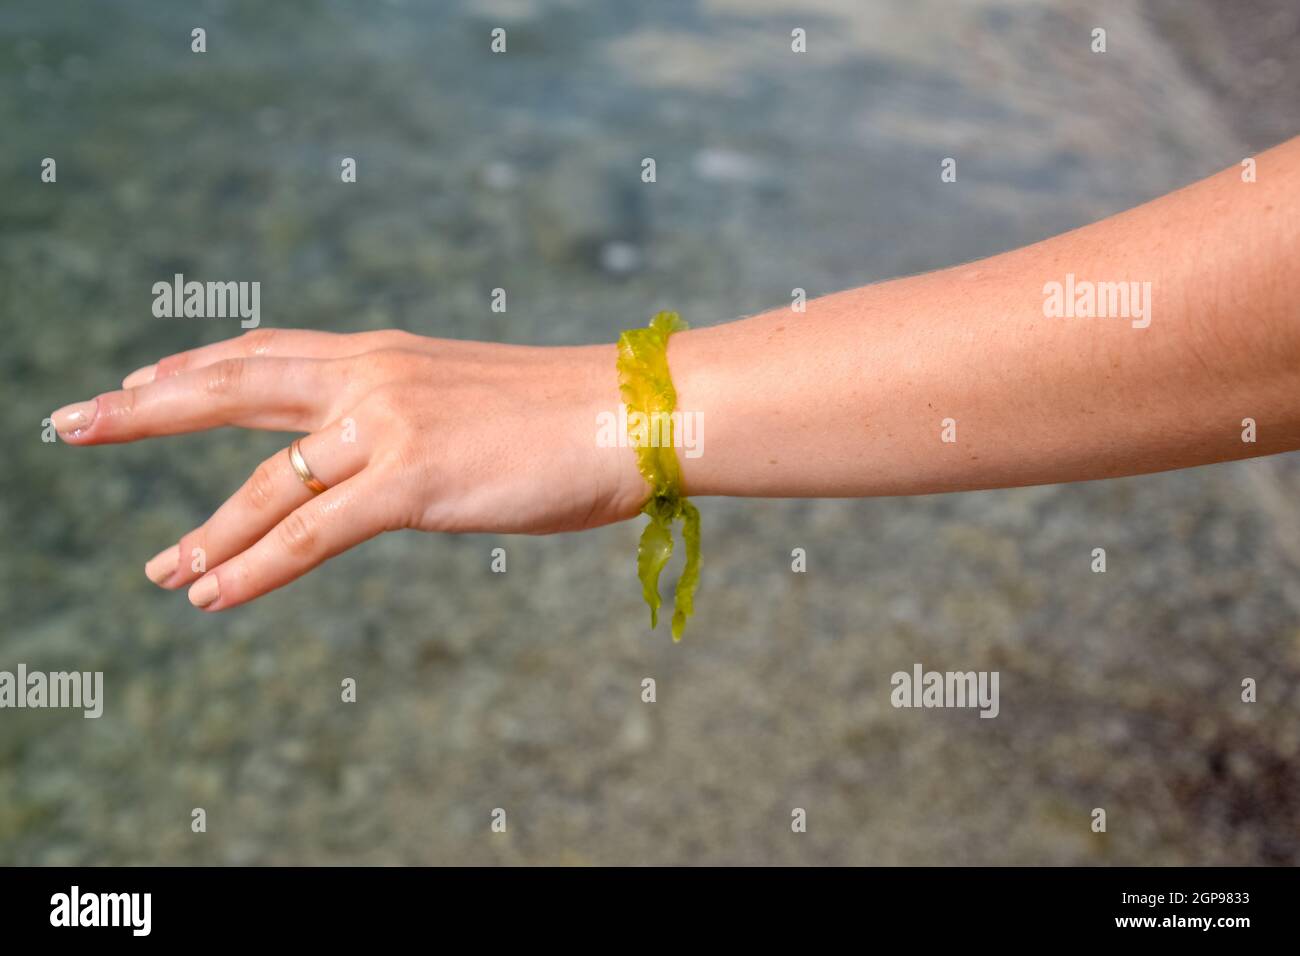 https://c8.alamy.com/comp/2GP9833/algae-bracelet-on-a-female-hand-romantic-seaweed-decoration-2GP9833.jpg